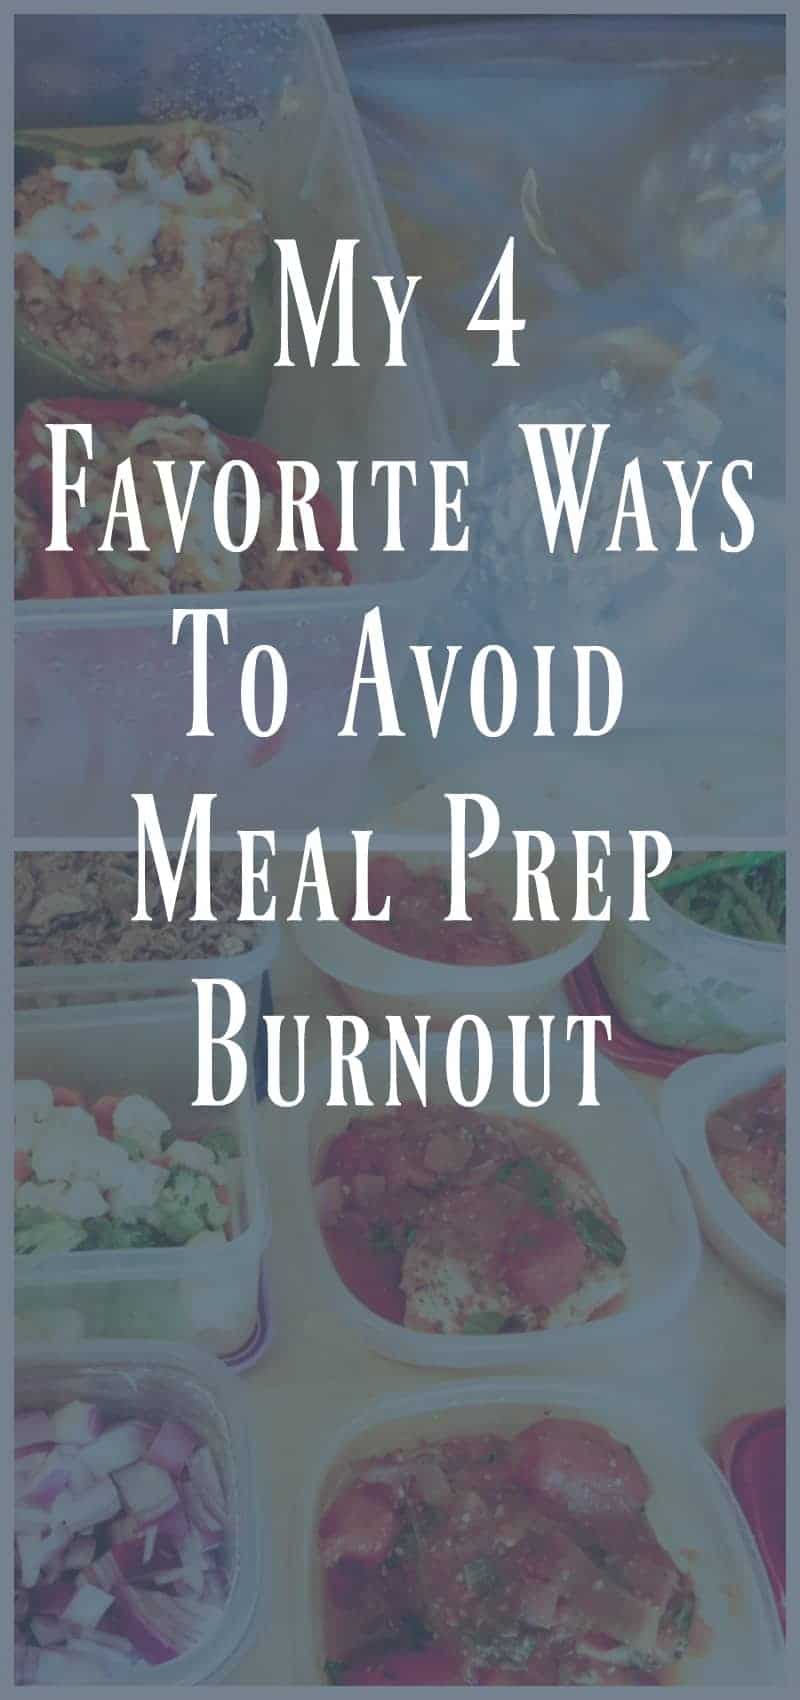 My 4 Favorite Ways to Avoid Meal Prep Burnout